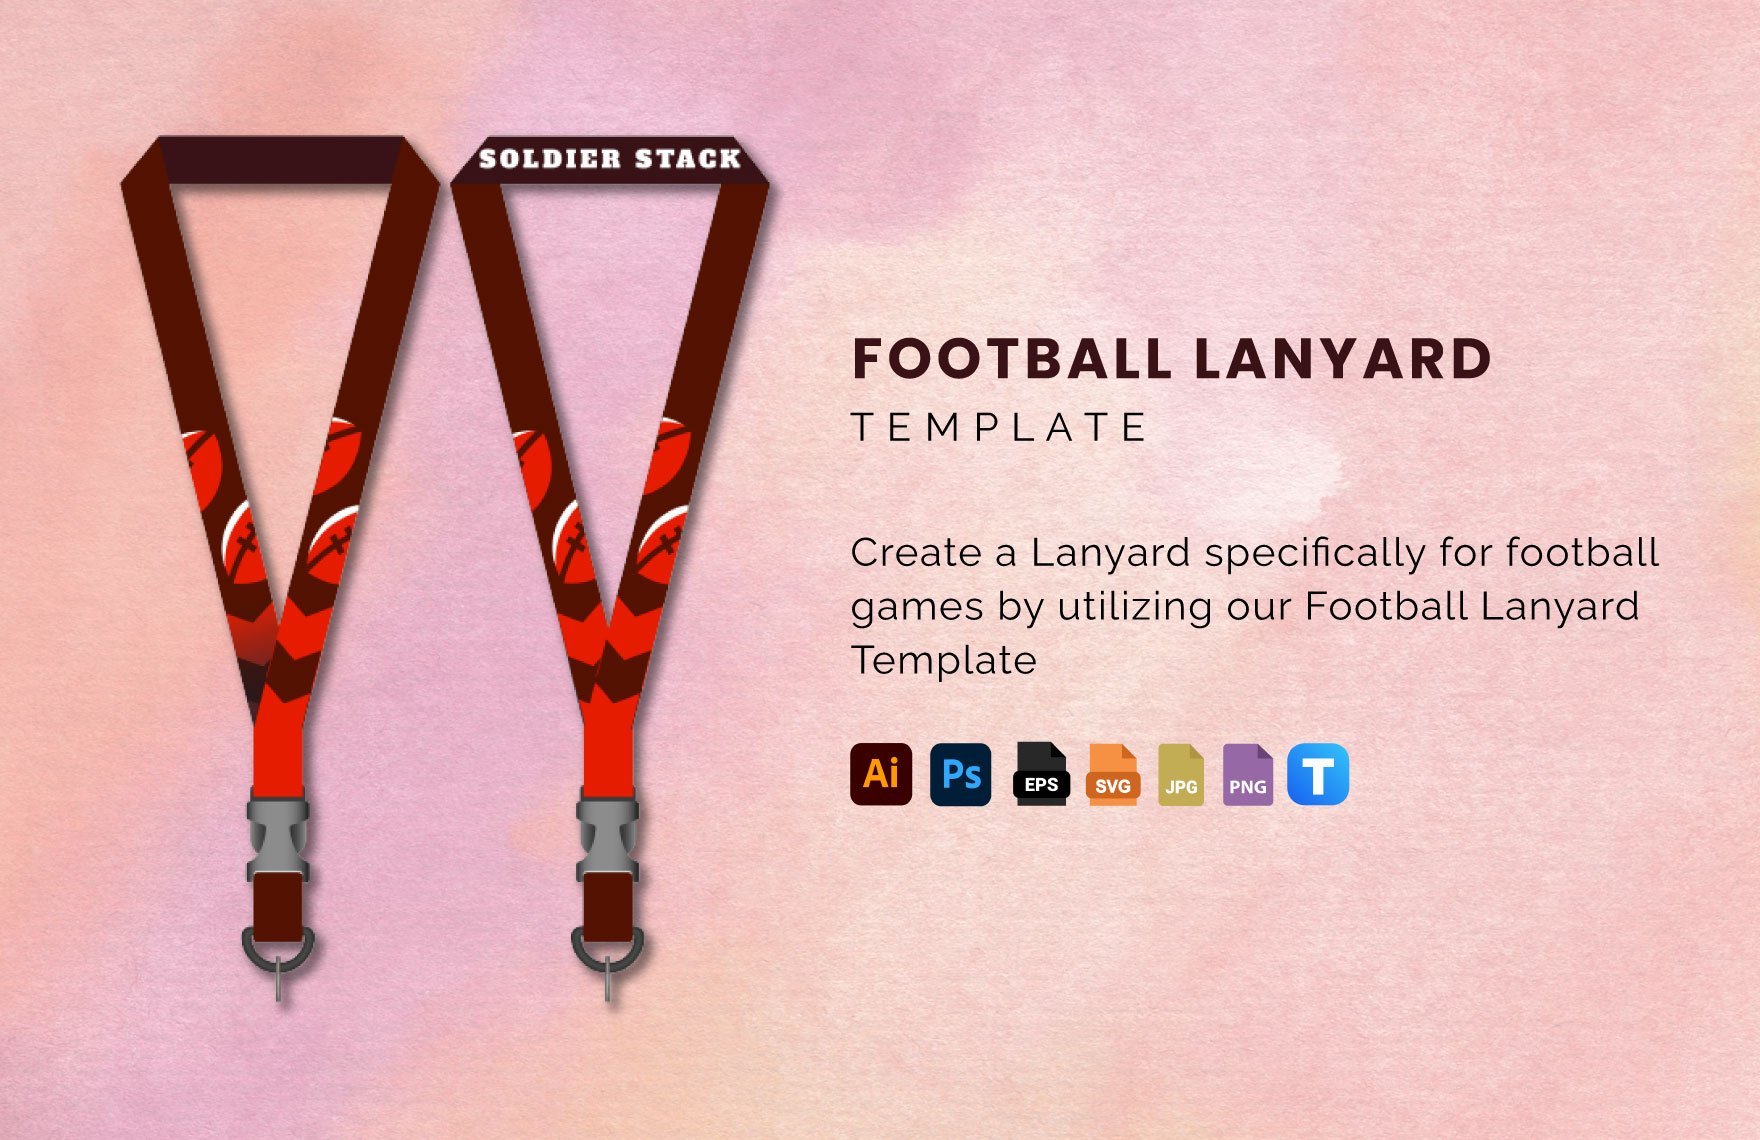 Football Lanyard Template in Illustrator, PSD, EPS, SVG, JPG, PNG